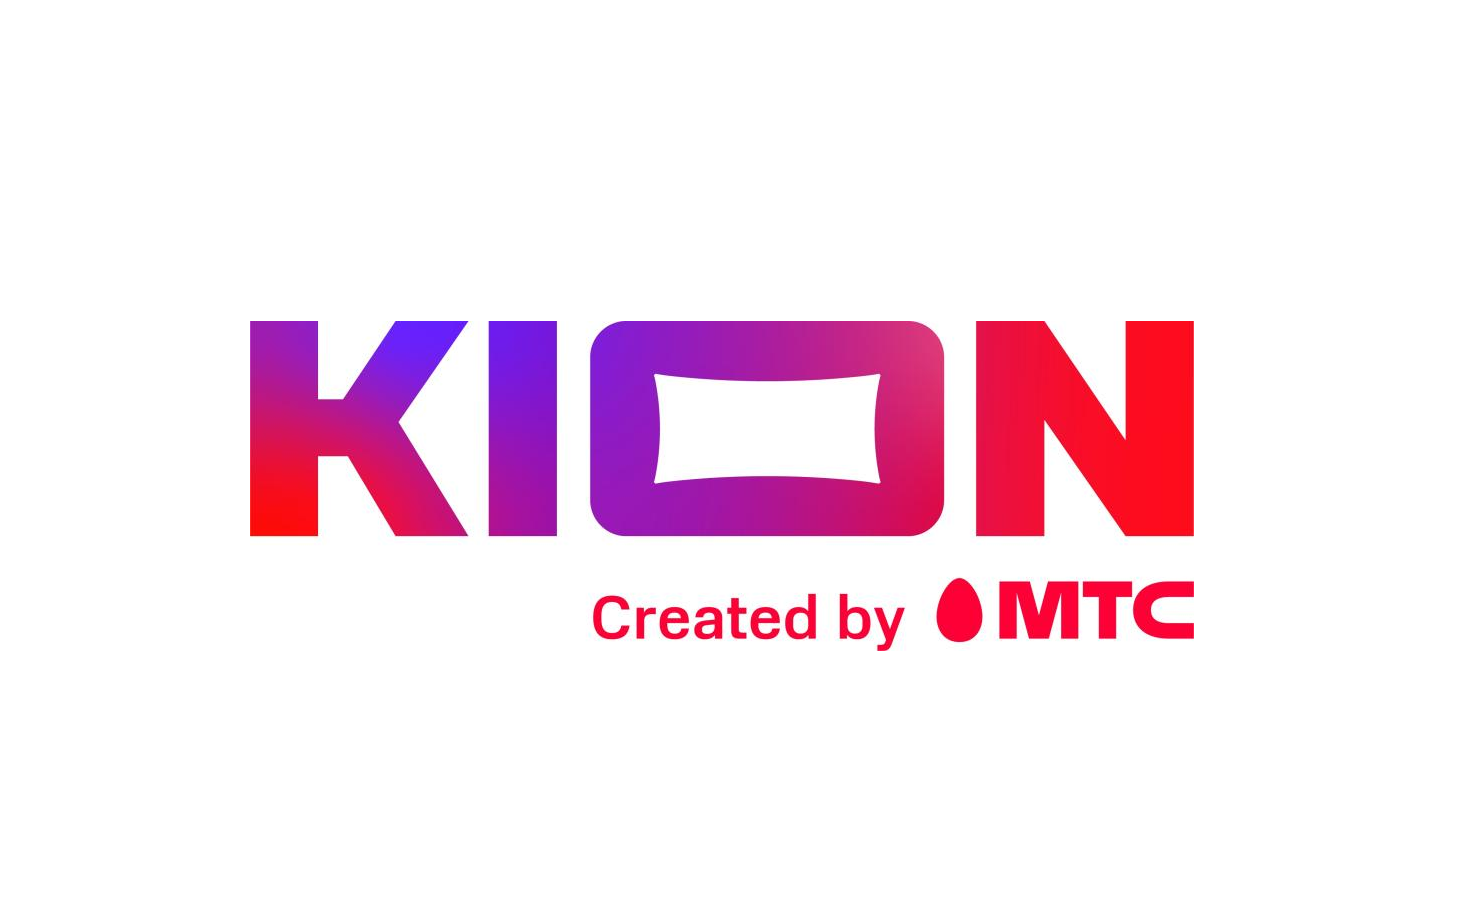 Kion mts down detector